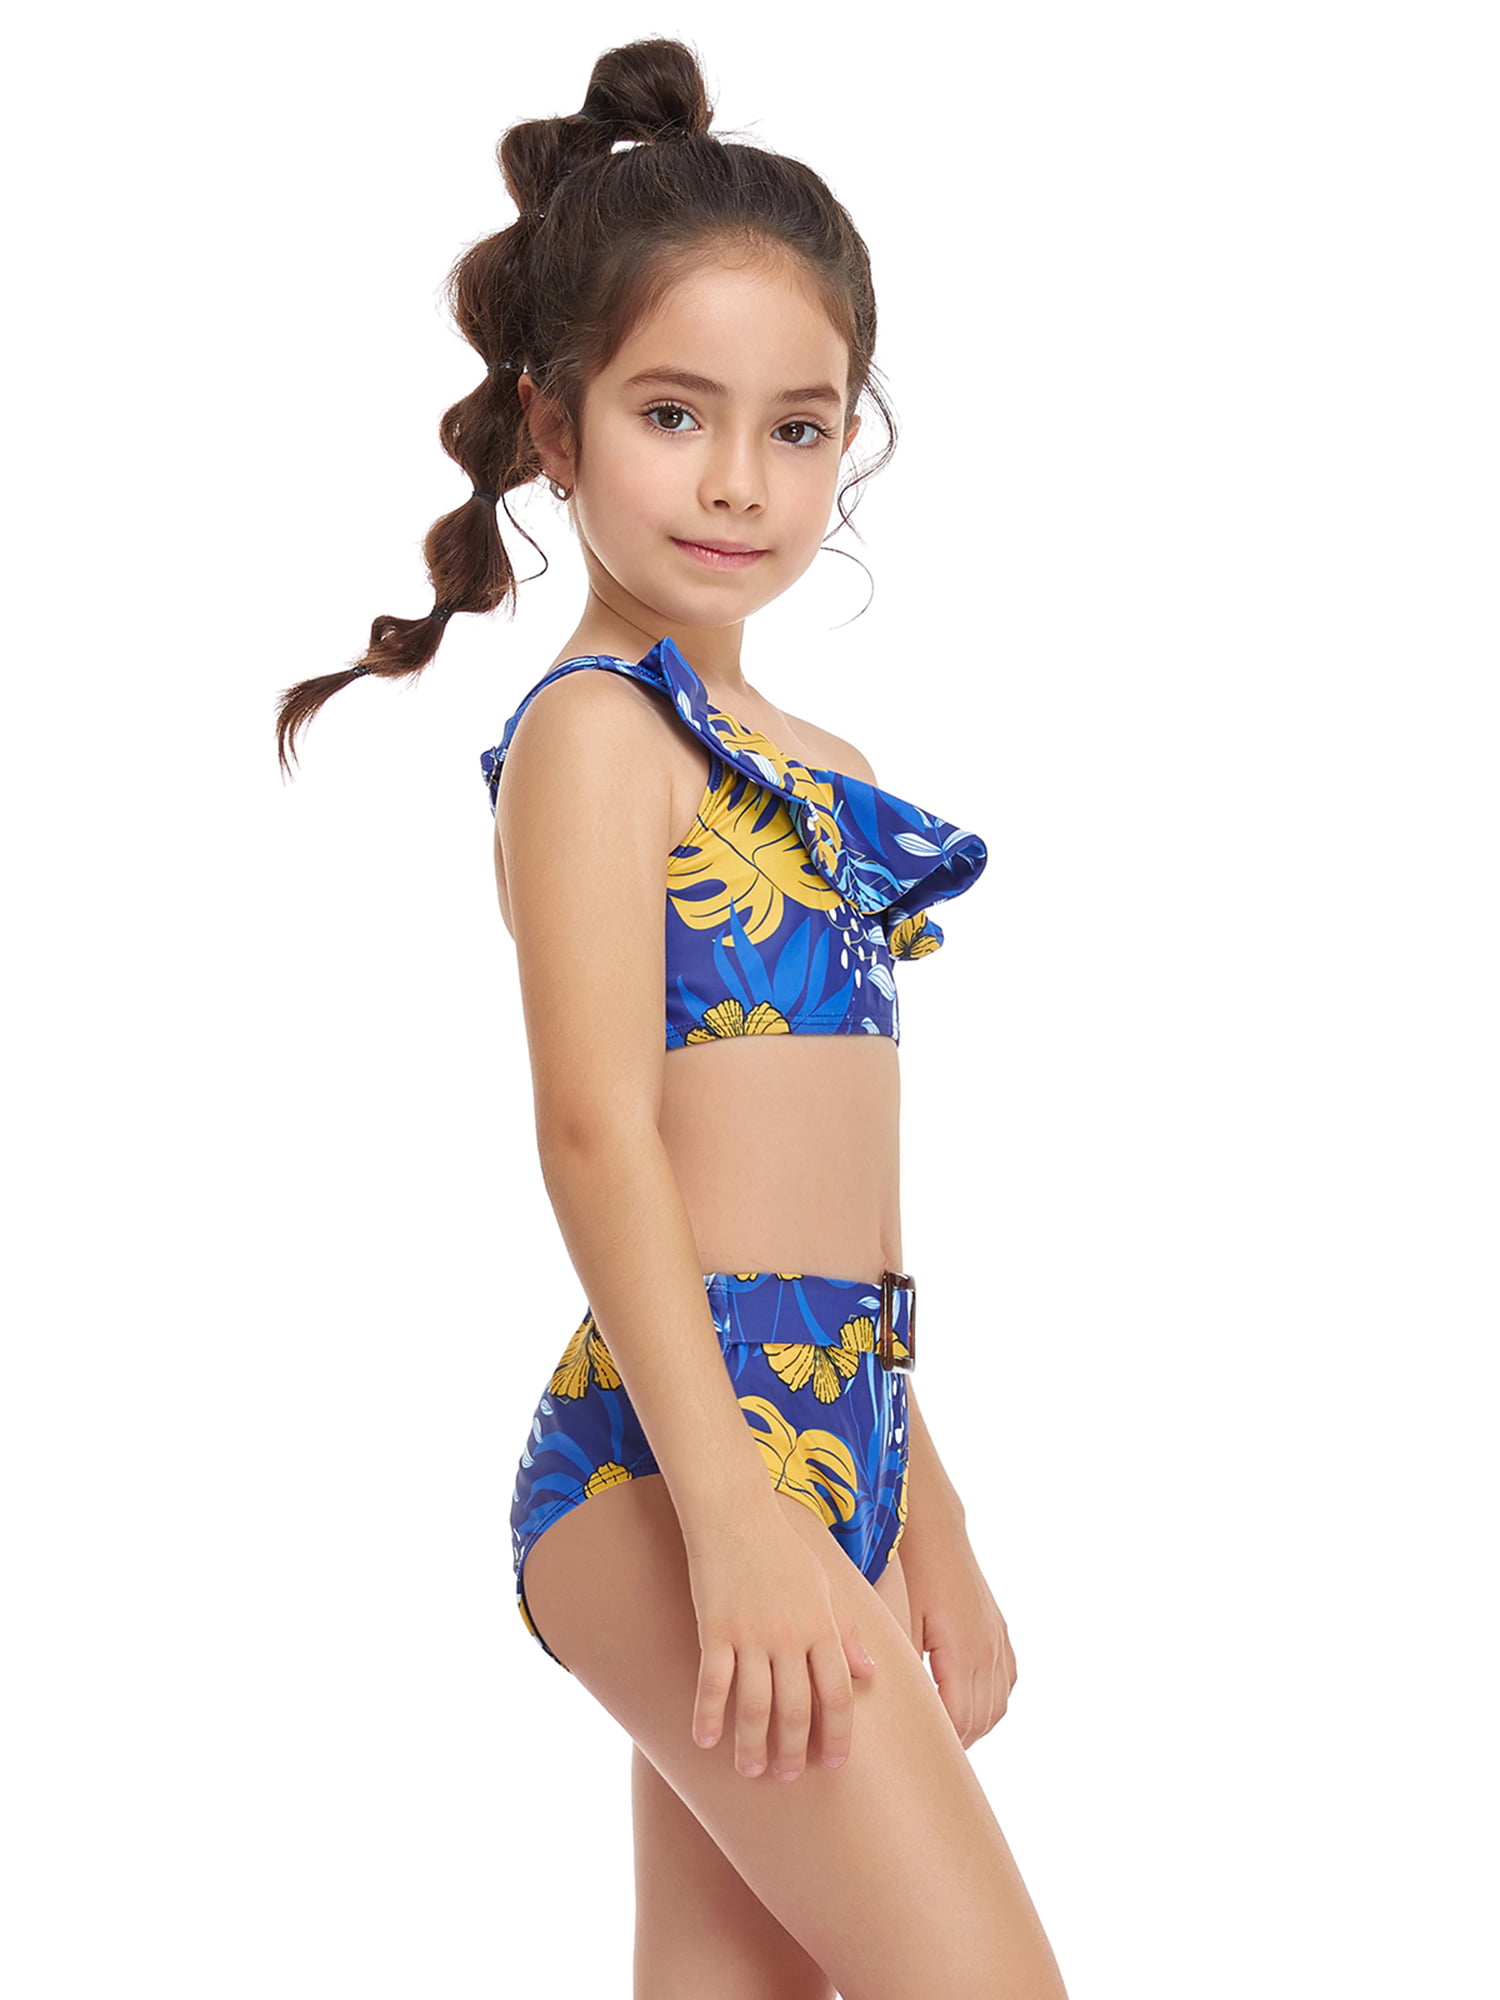 Genuiskids Toddler Infant Baby Girl Swimsuit Two Piece Set Kid Print Plaid  Pattern Bathing Suit Fly Sleeve Tops Matching Shorts Beachwear 